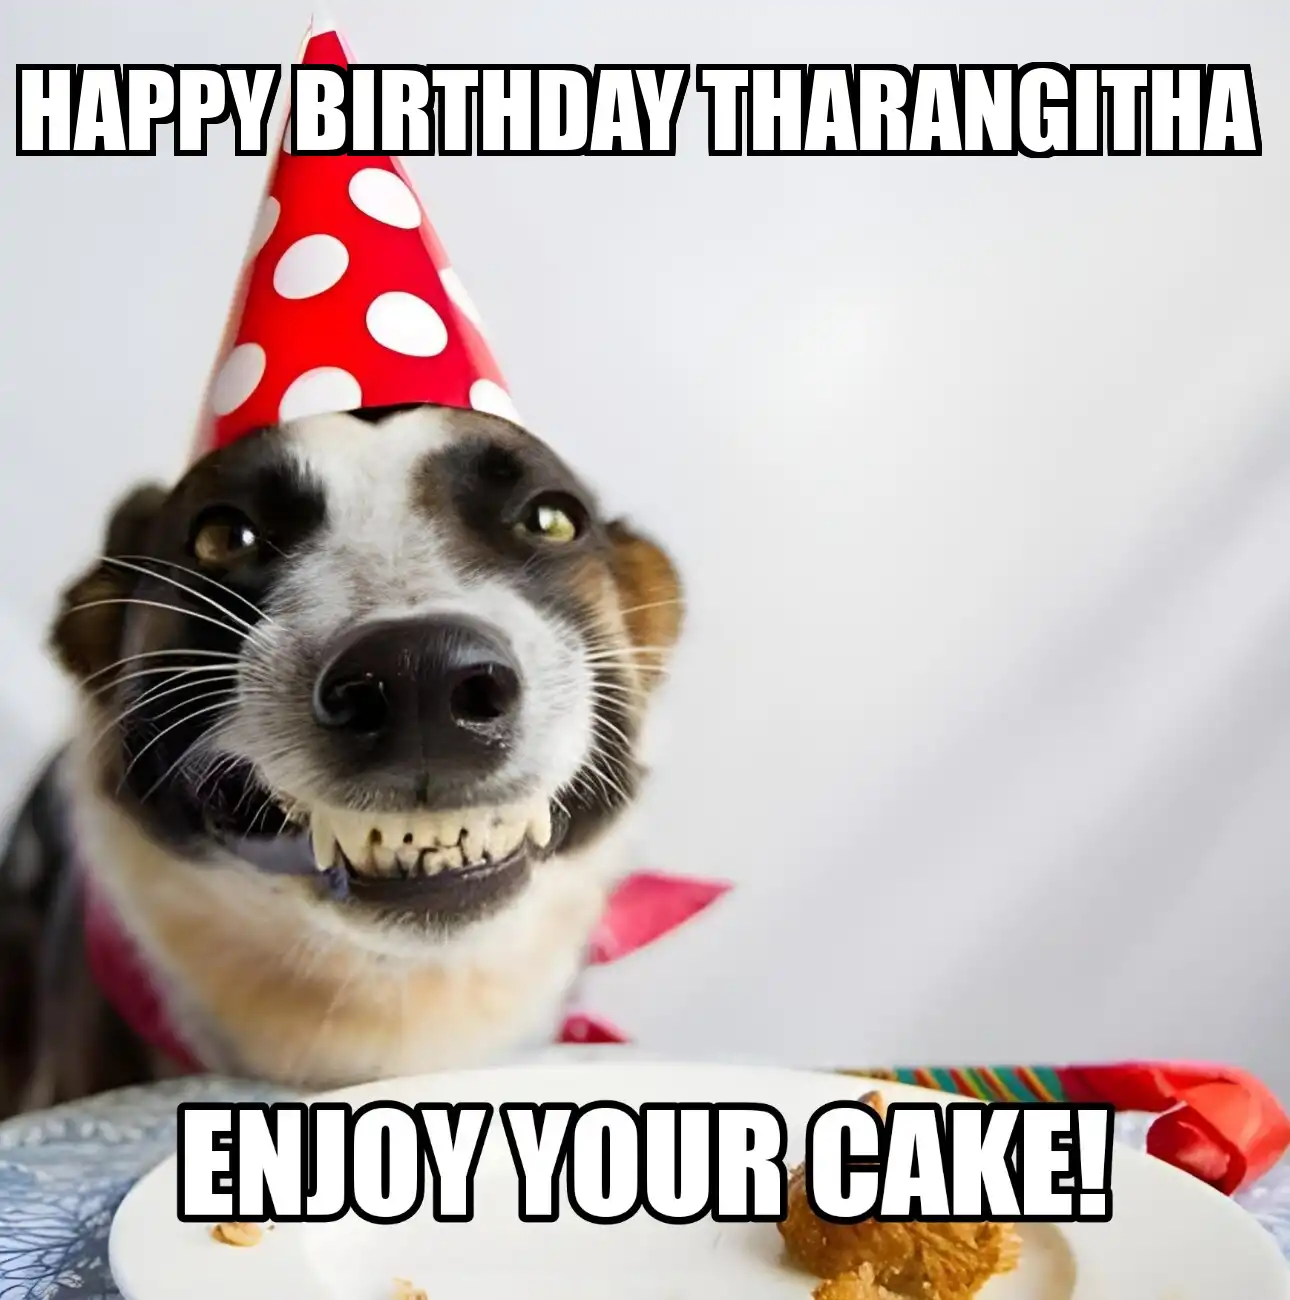 Happy Birthday Tharangitha Enjoy Your Cake Dog Meme